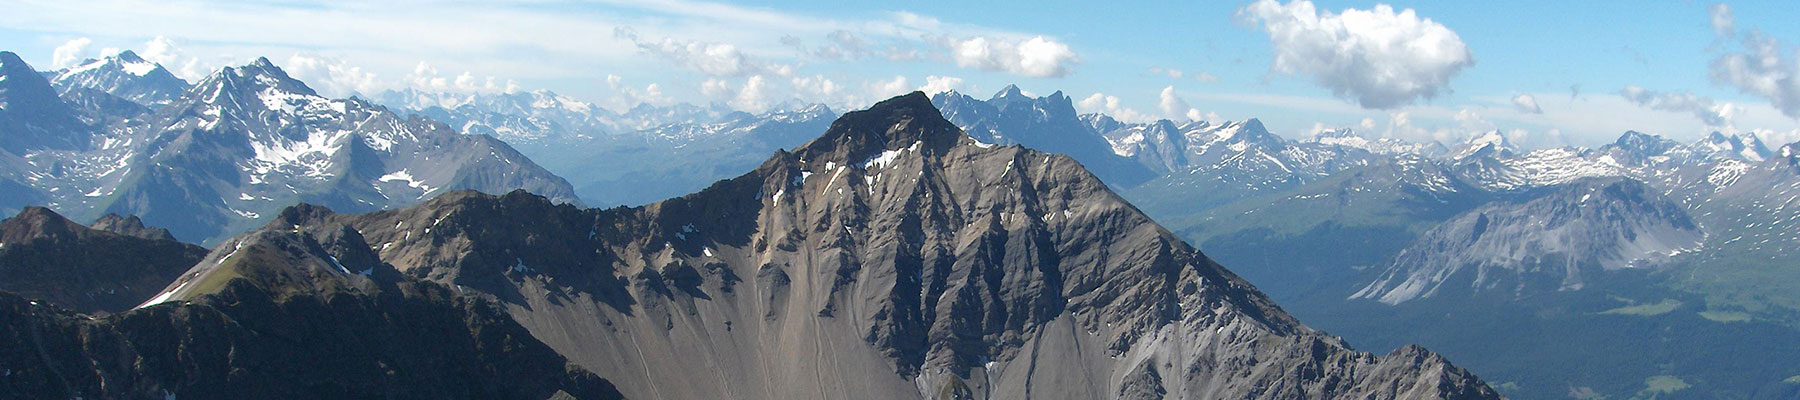 Lenzerhorn Mit Berggipfelpanorama